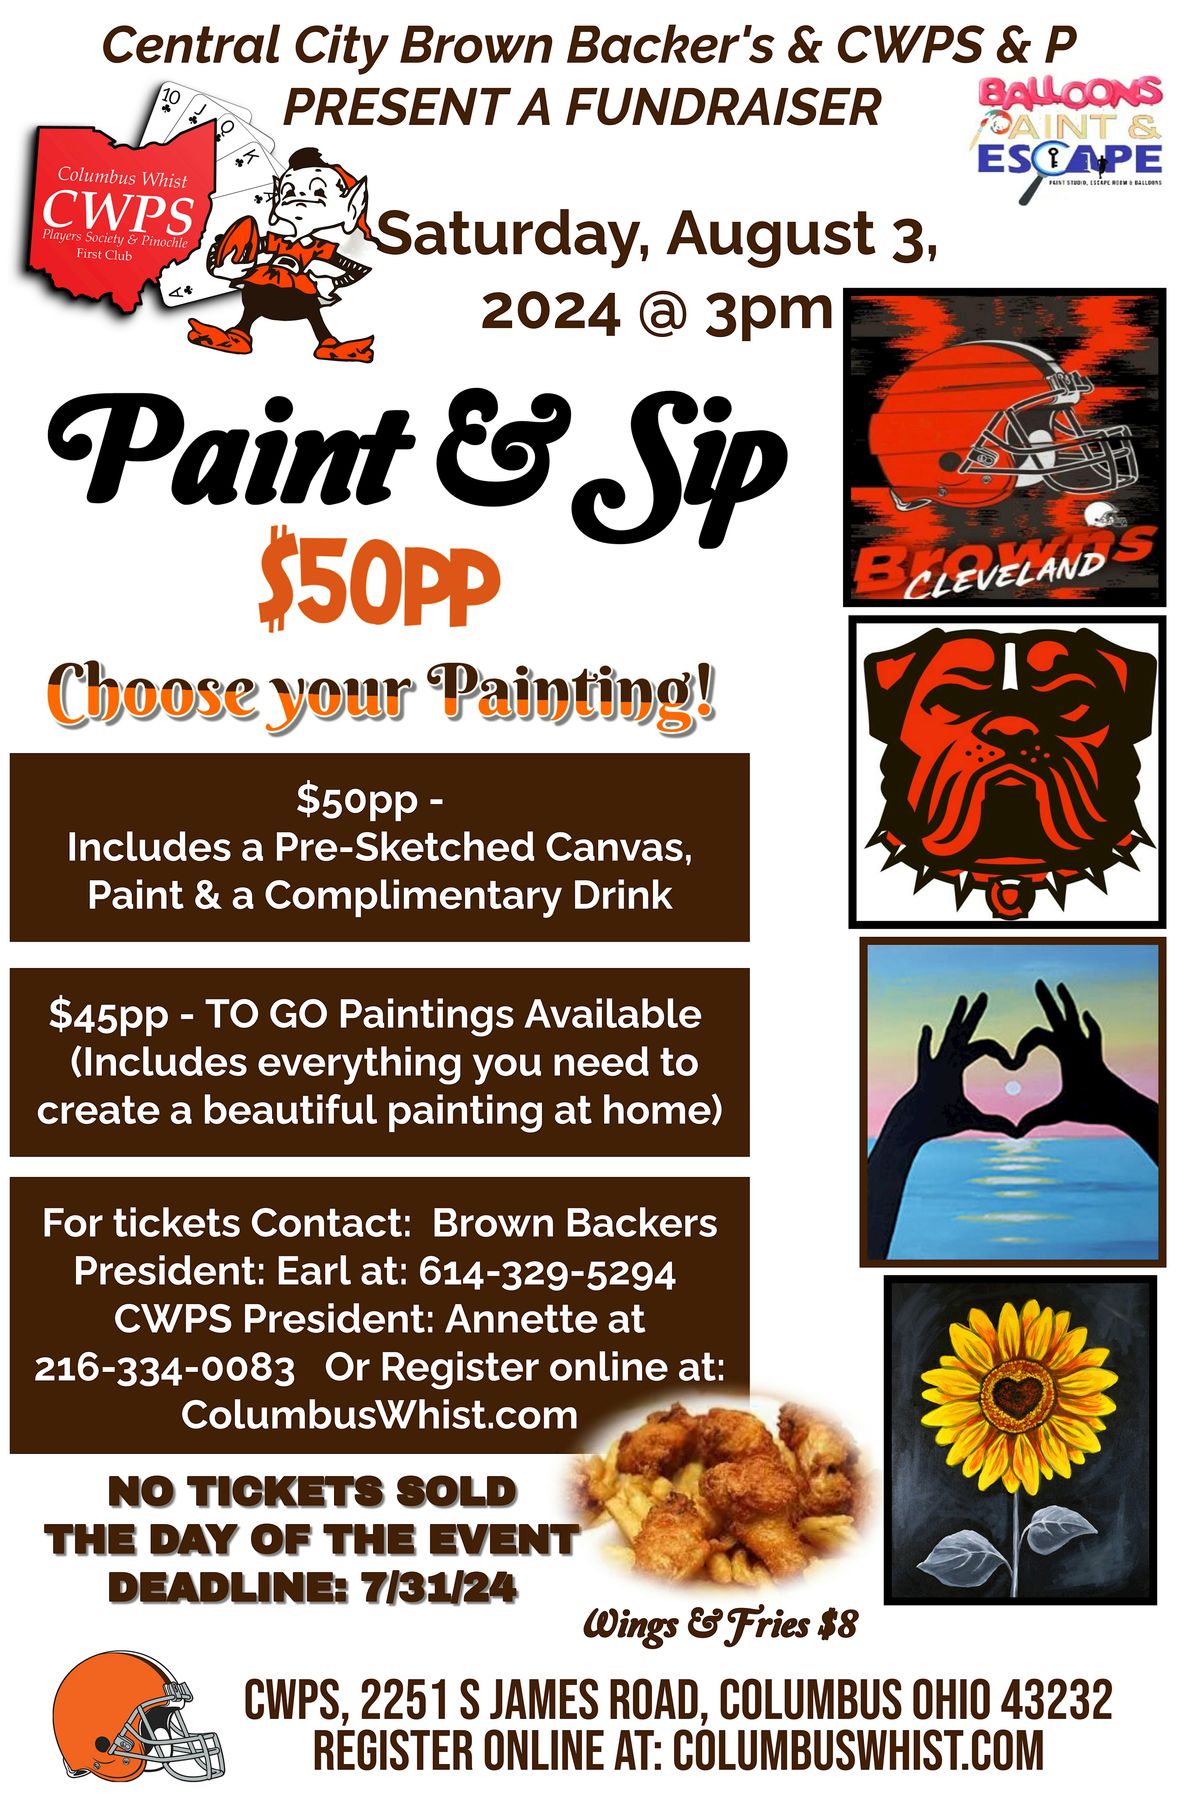 Capital City Brown Backer's & CWPS & P - Paint Fundraiser